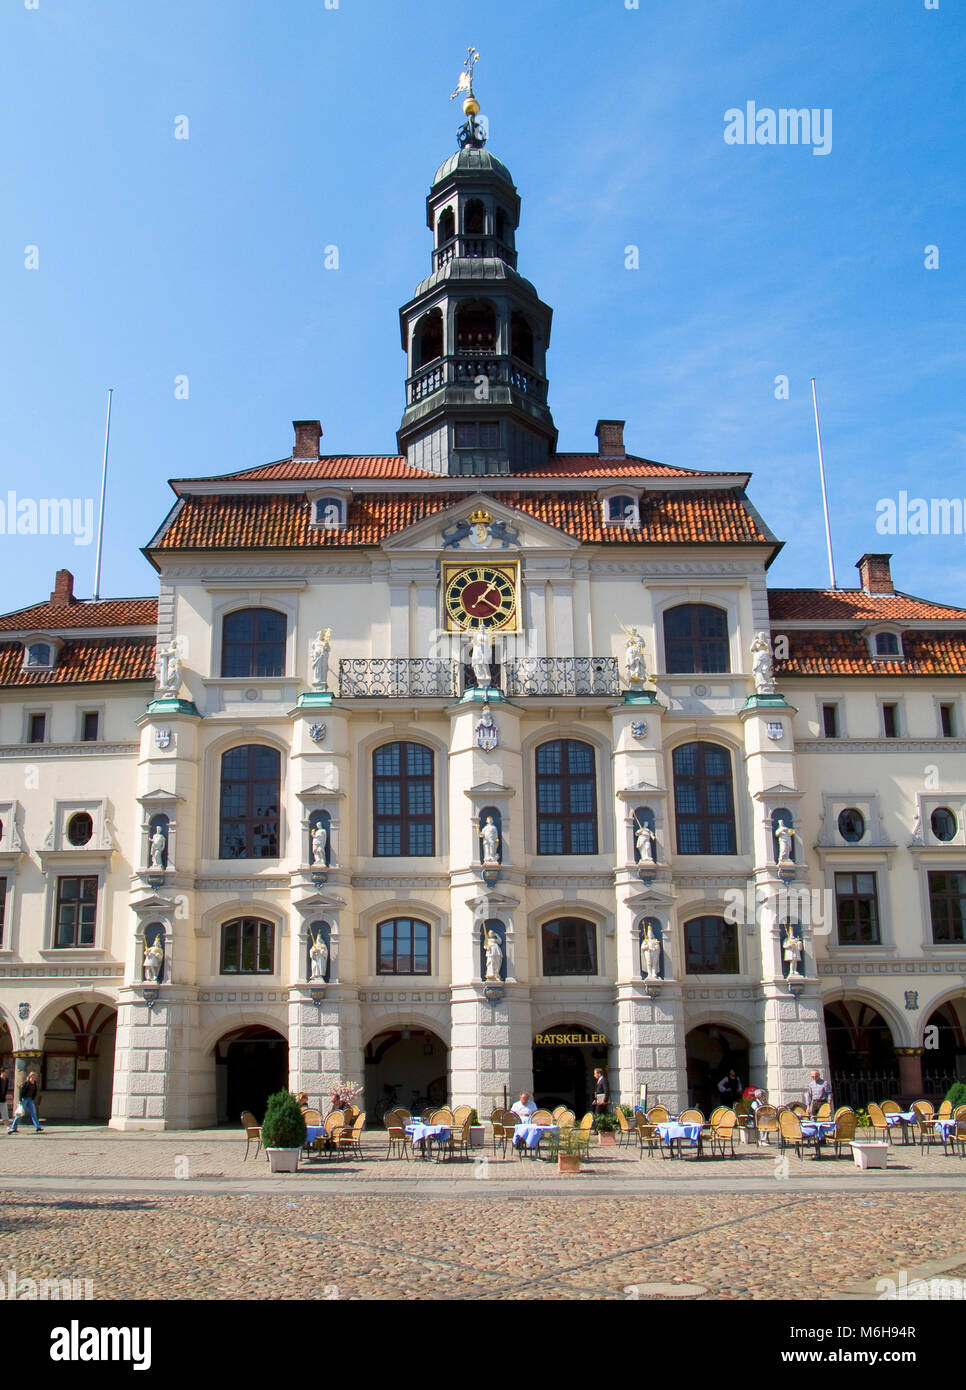 Townhall of Lueneburg, Niedersachsen, Germany. Stock Photo